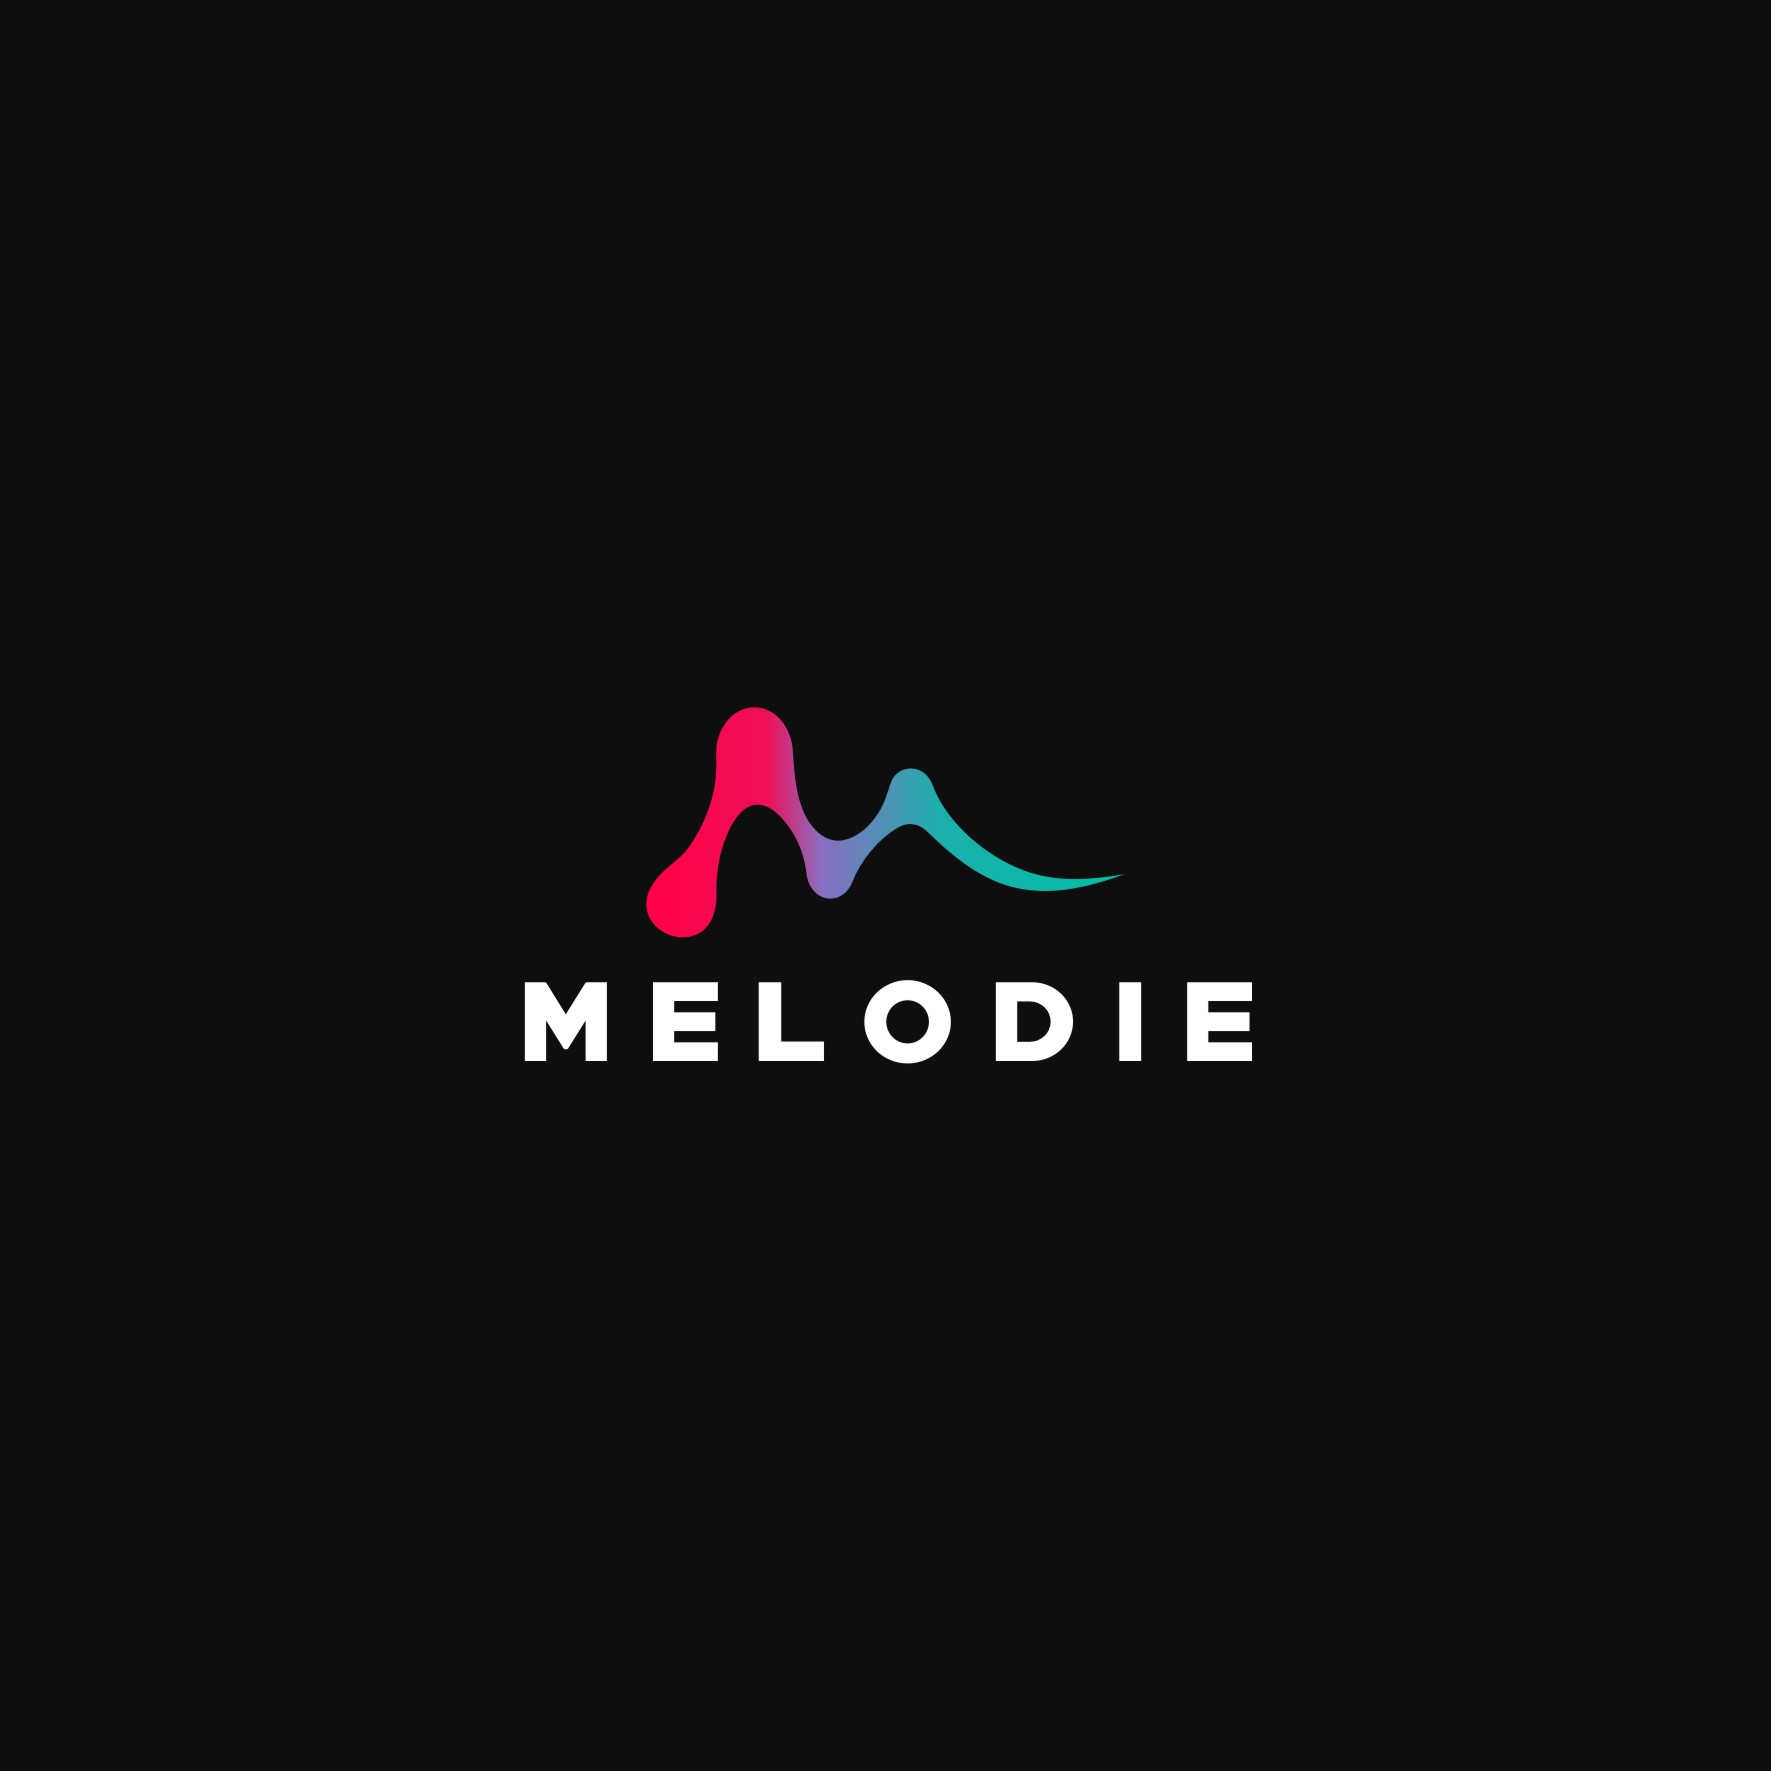 Melodie logo